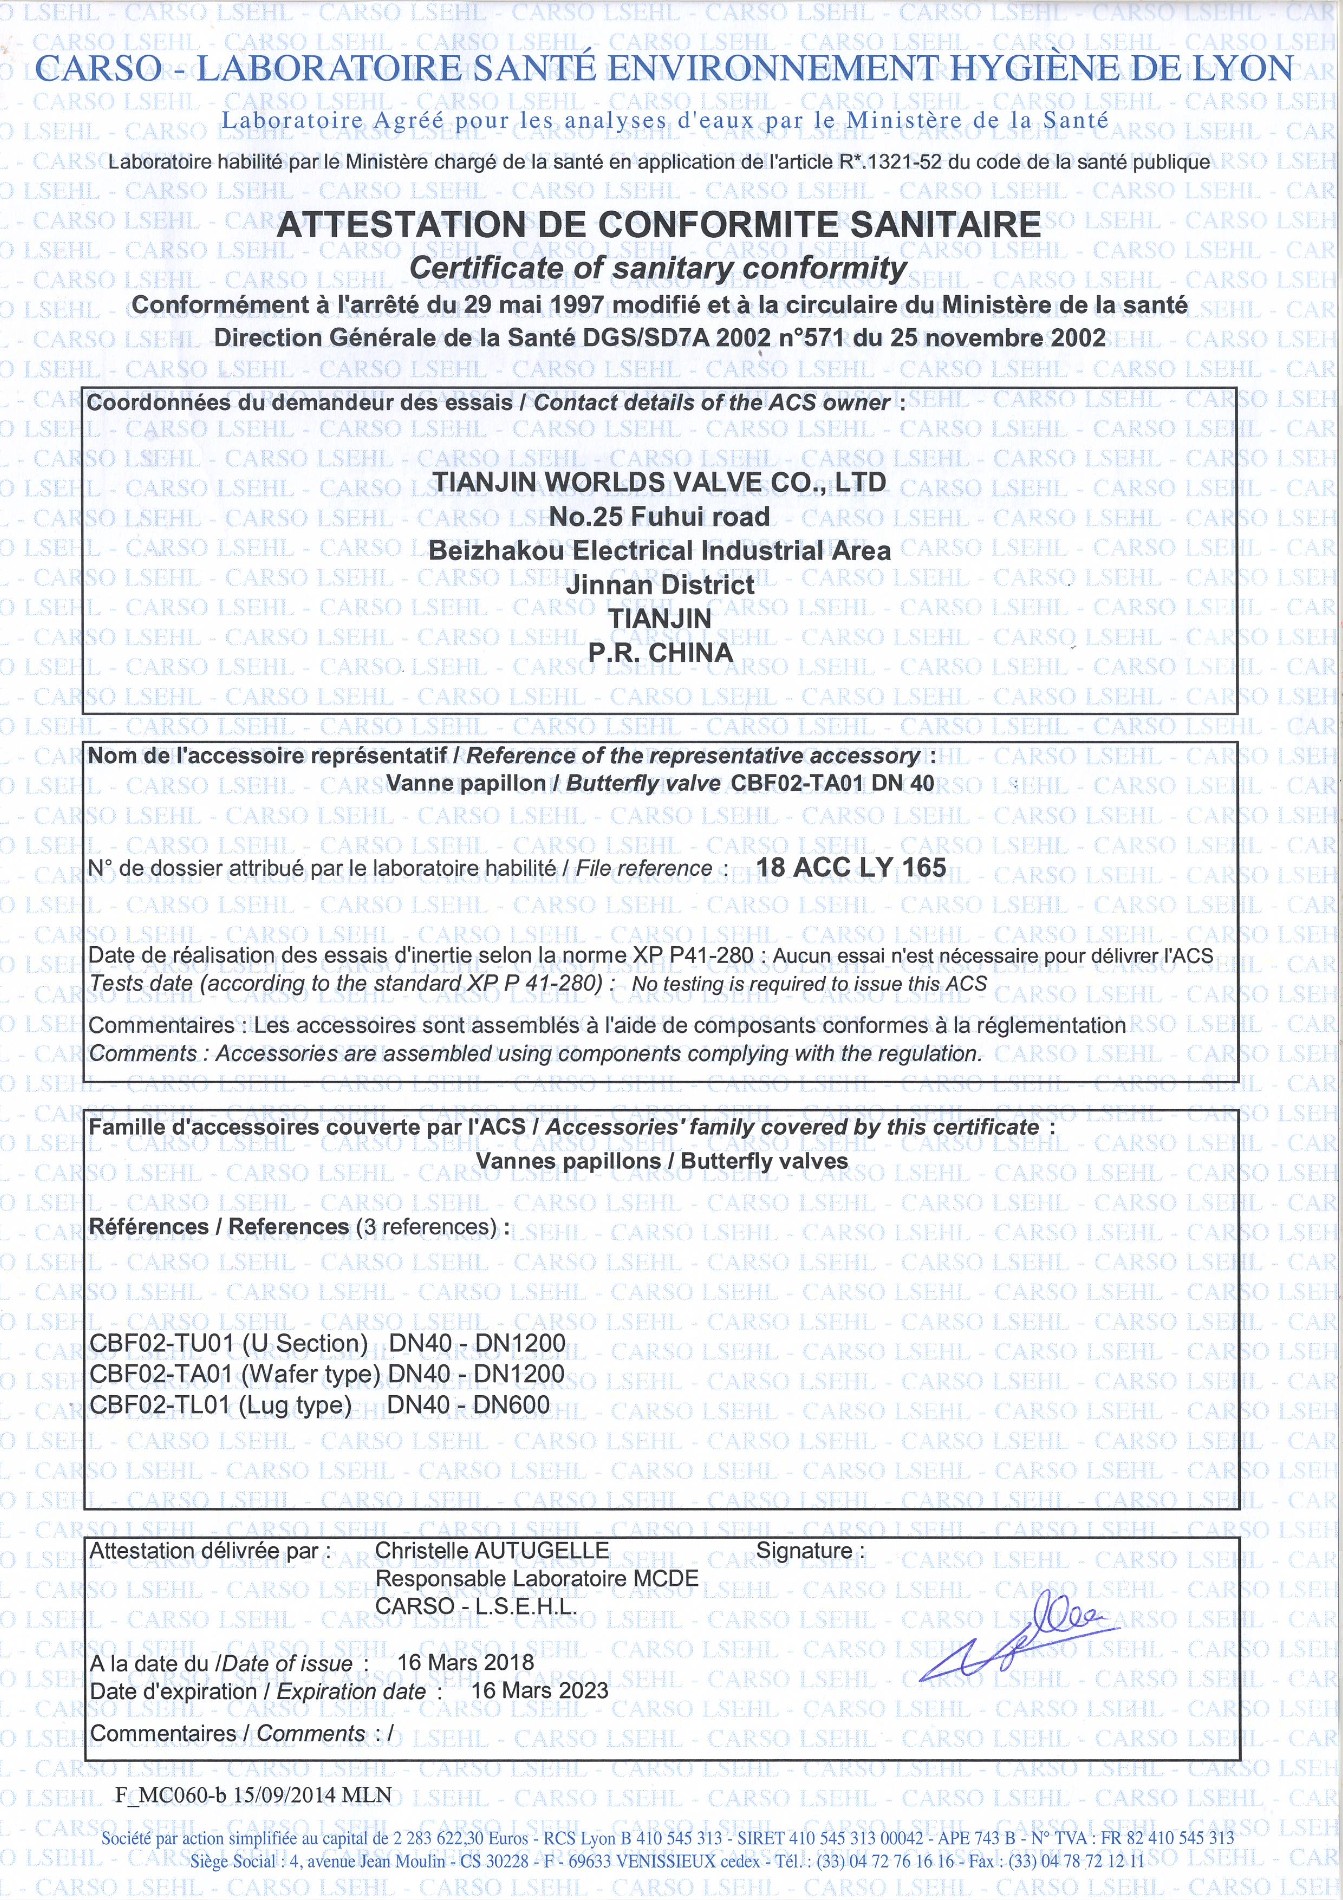 ACS butterfly valve Certificate